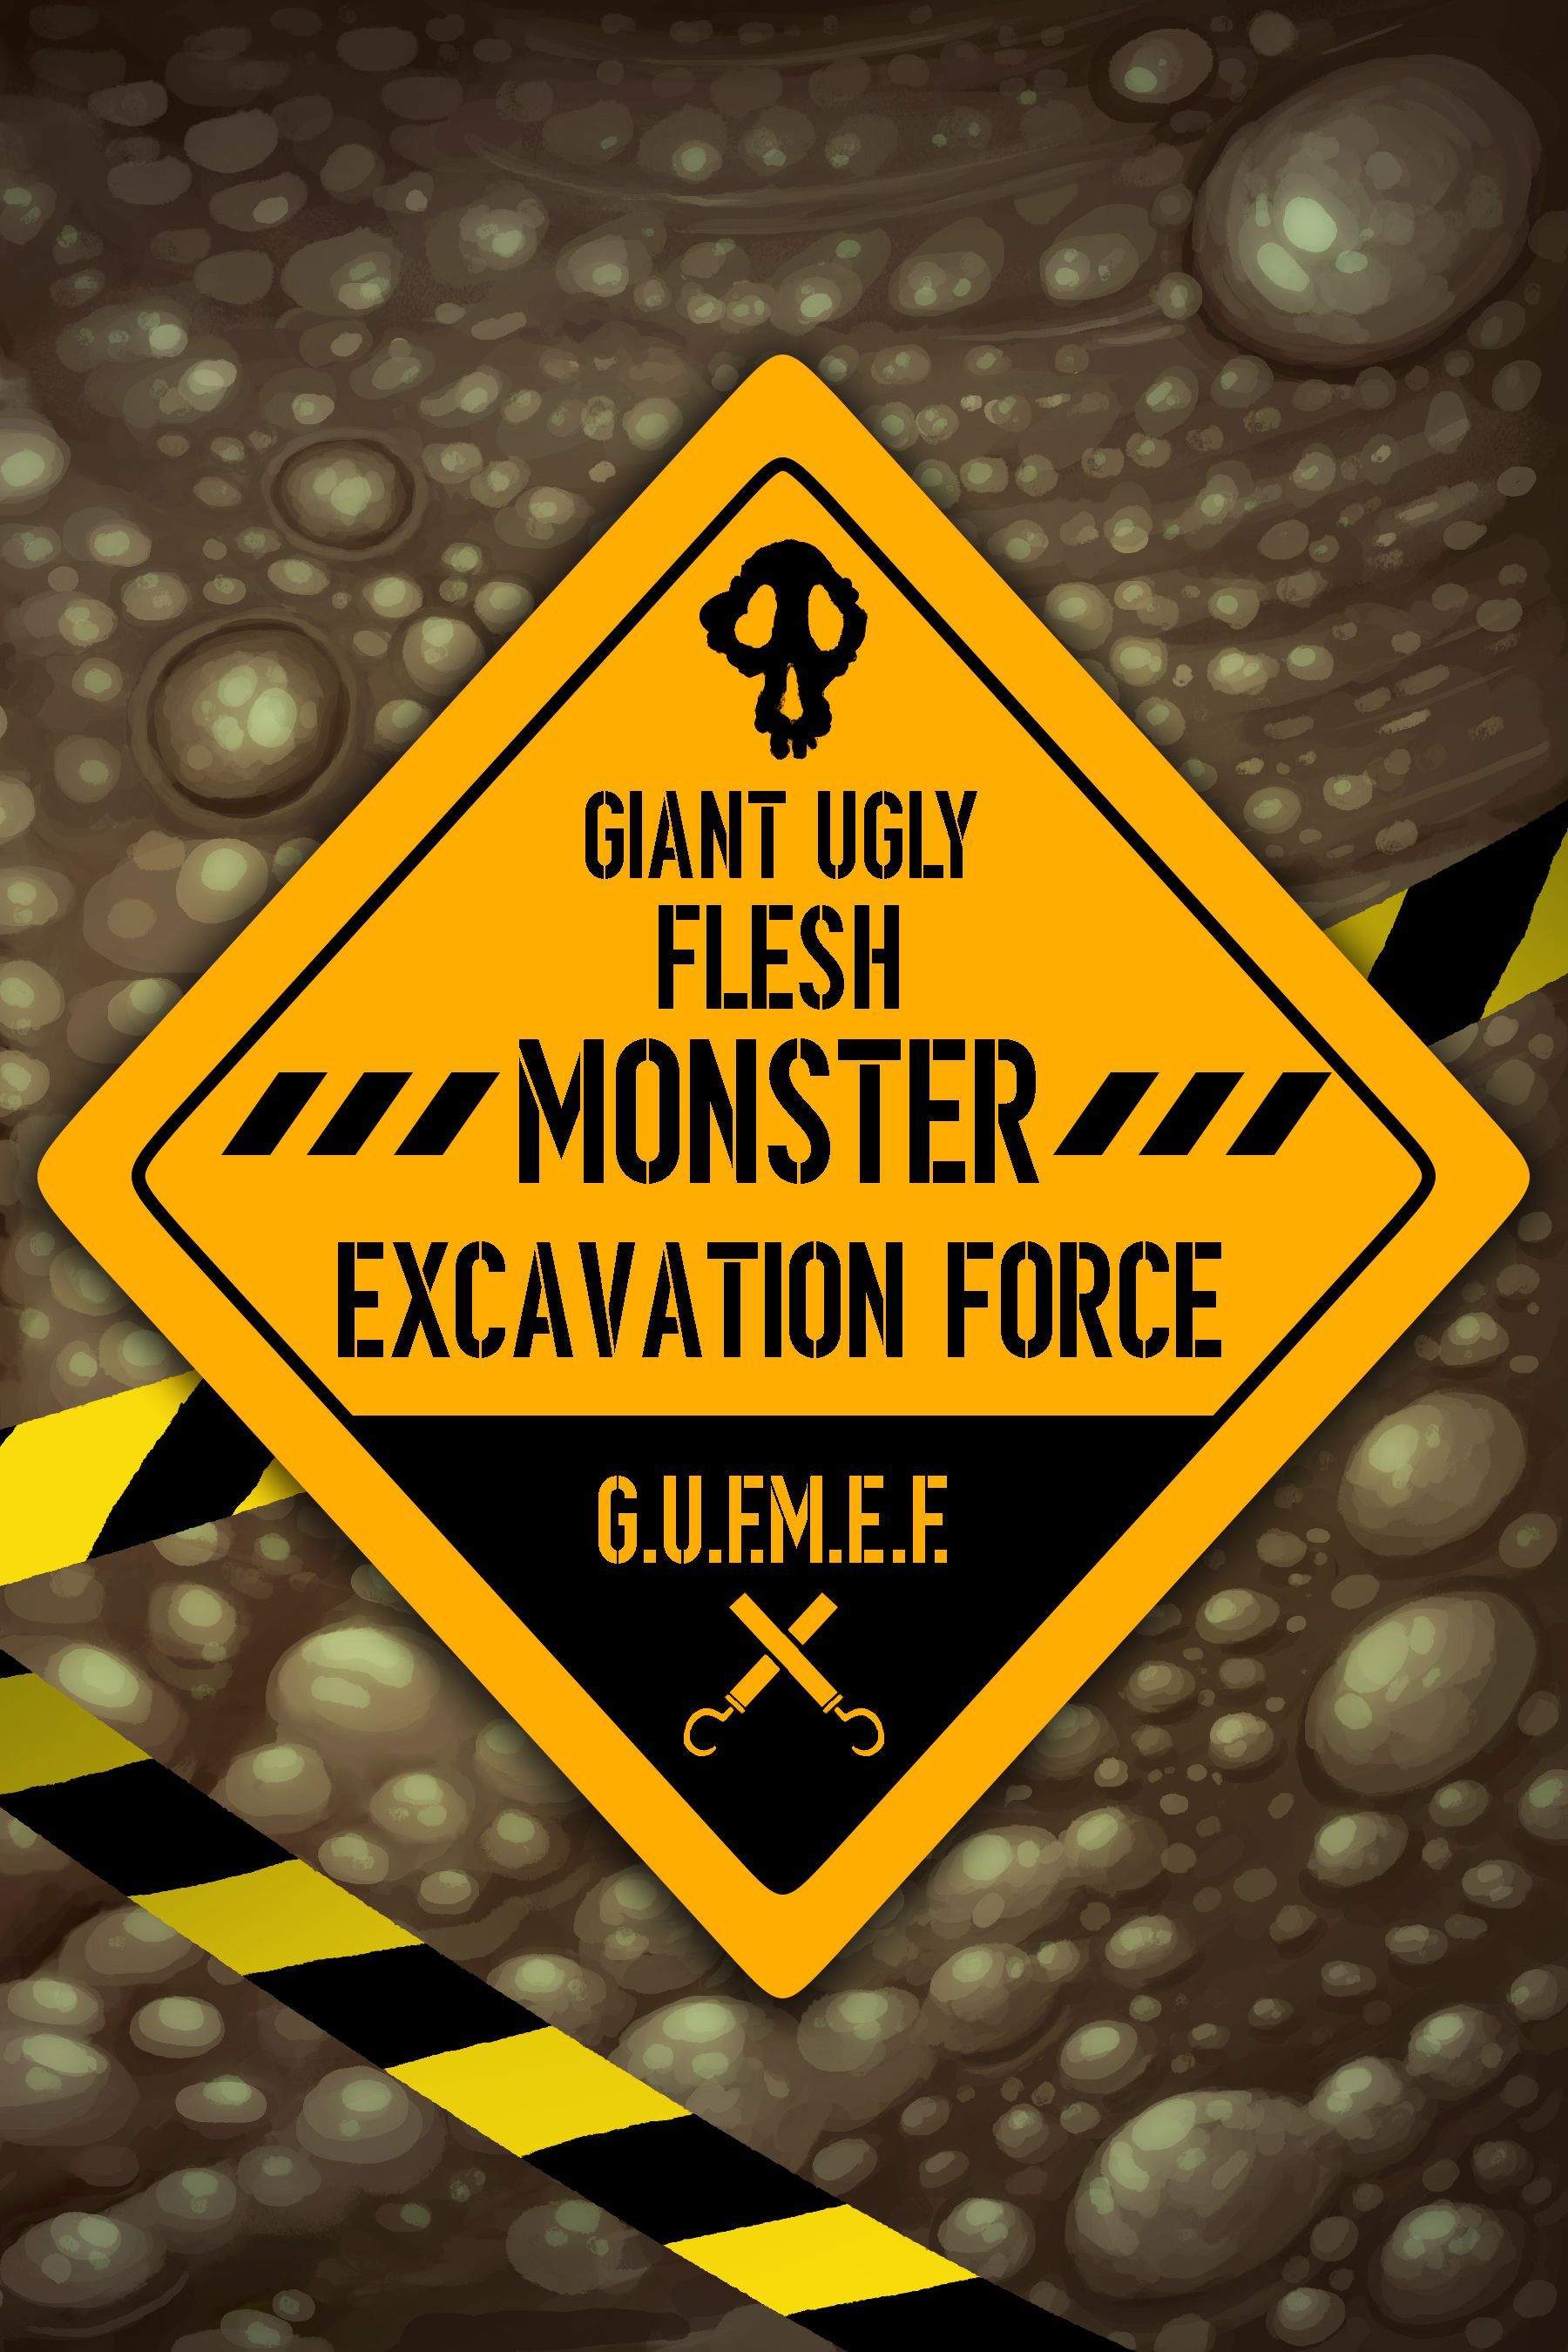 Giant Ugly Flesh Monster Excavation Force